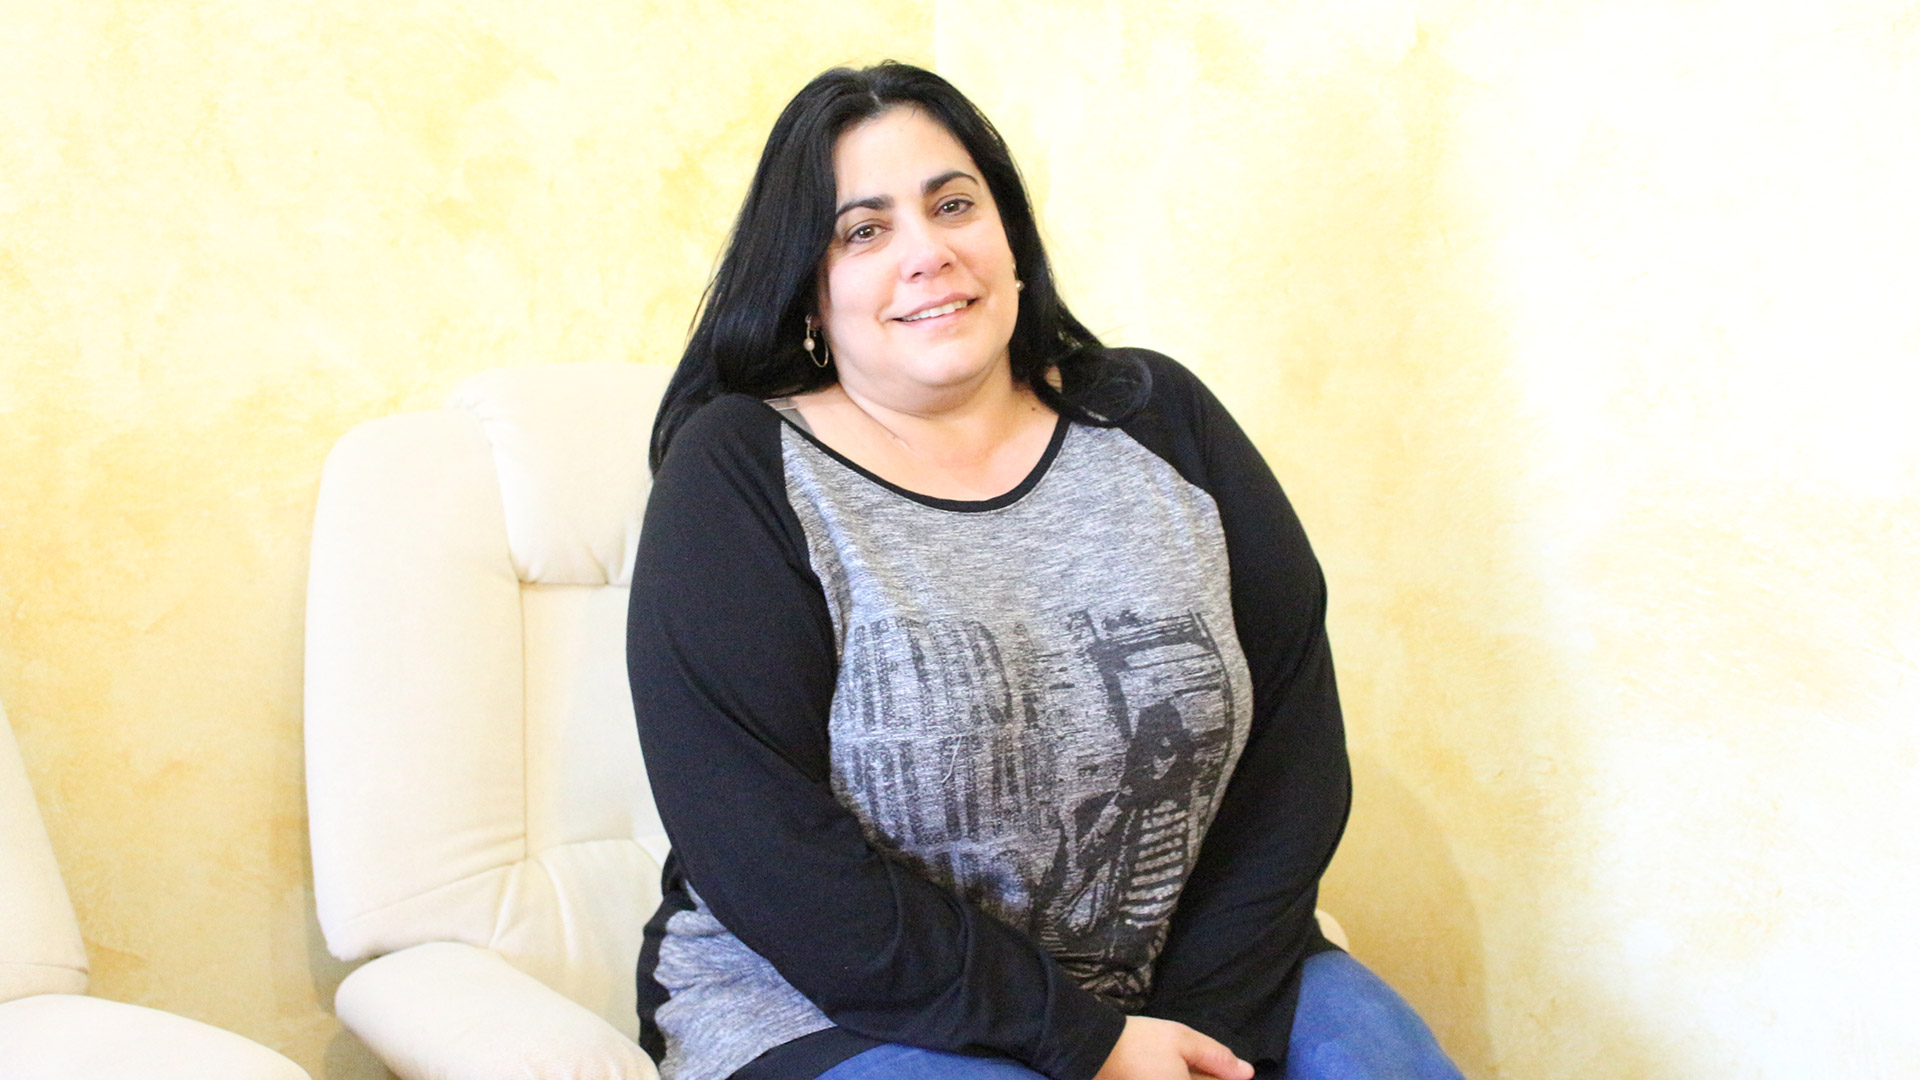 Raquel Gómez, víctima del 11M: "Me arrancaron la pierna, pero no la vida"